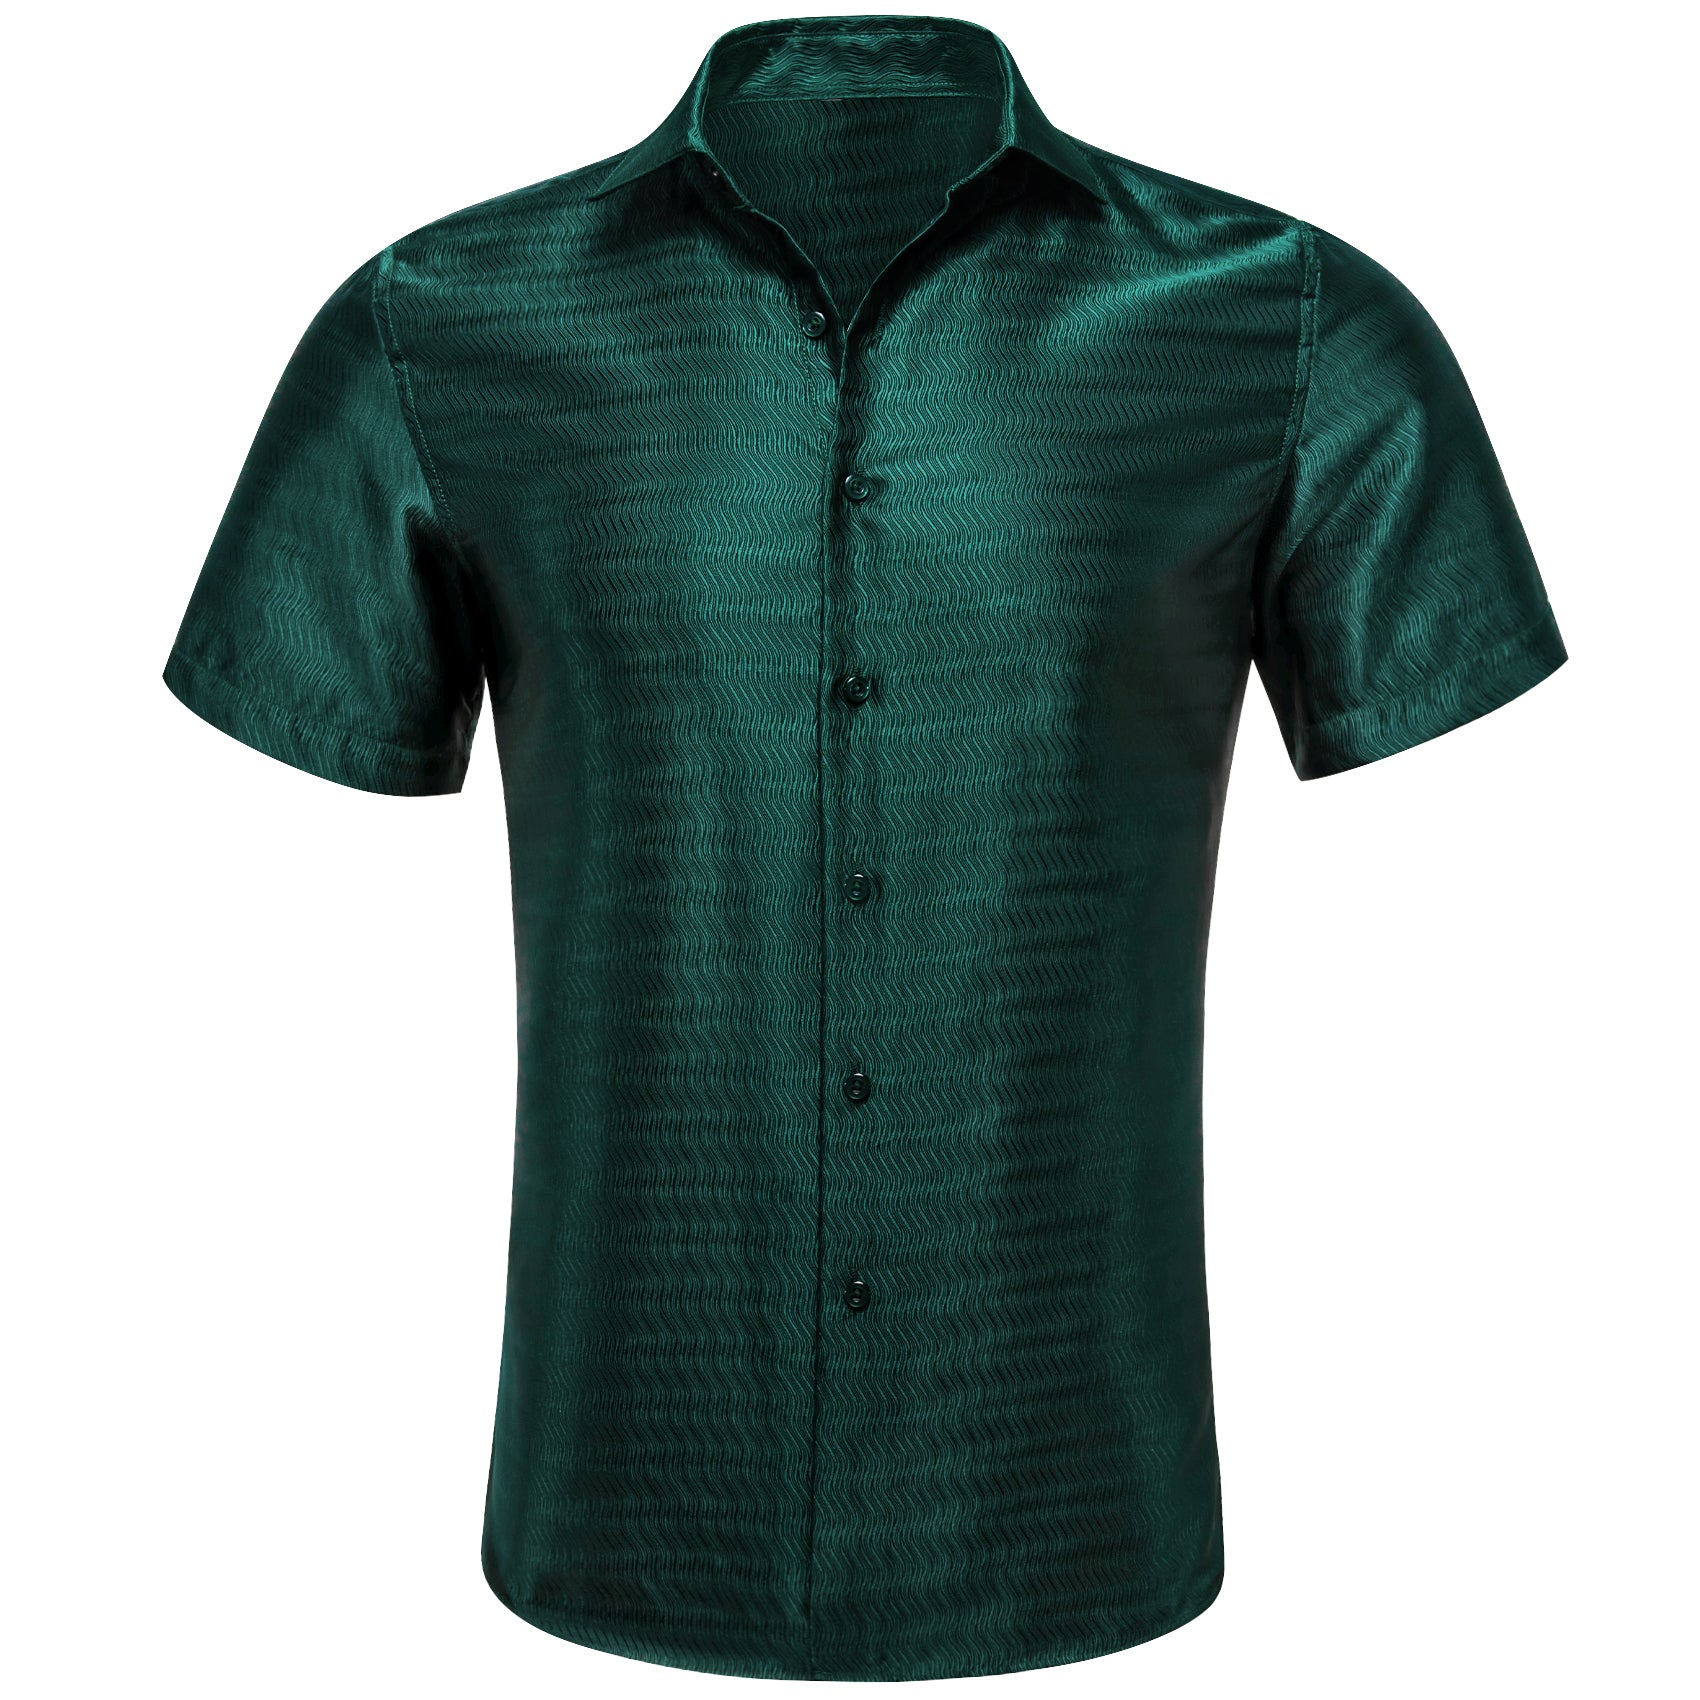 Barry.wang Summer Green Solid Short Sleeves Shirt